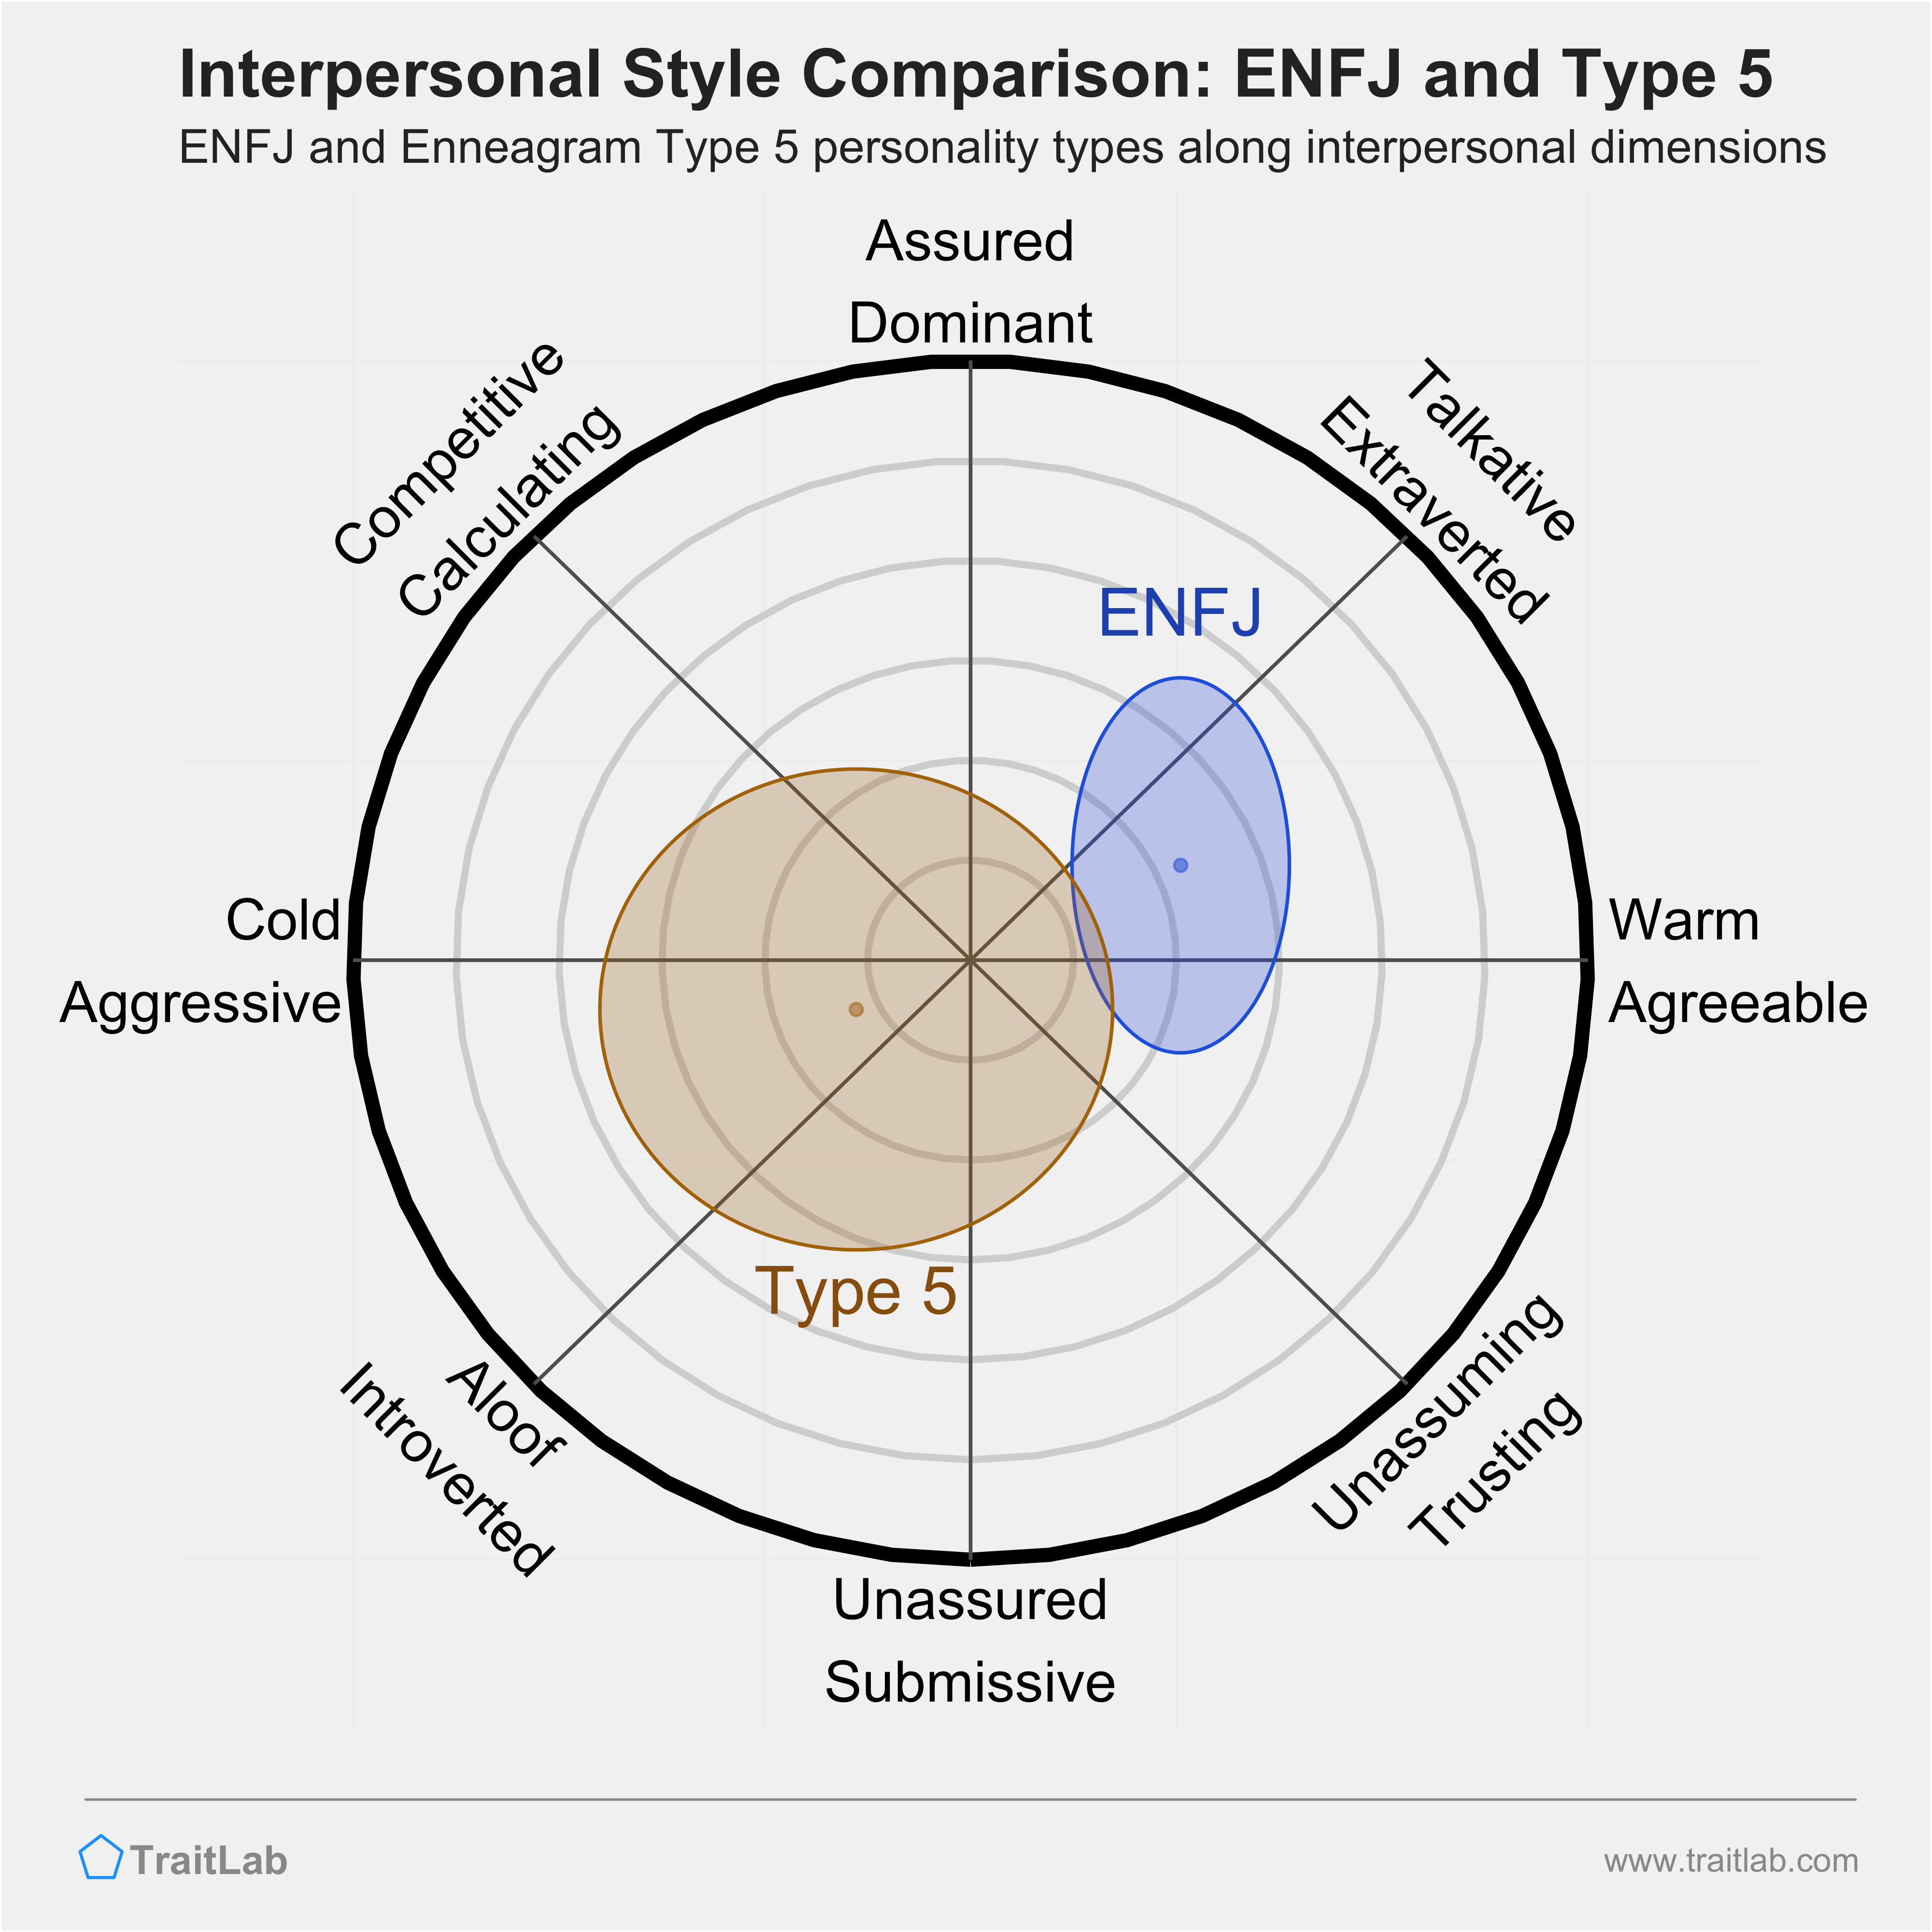 Enneagram ENFJ and Type 5 comparison across interpersonal dimensions